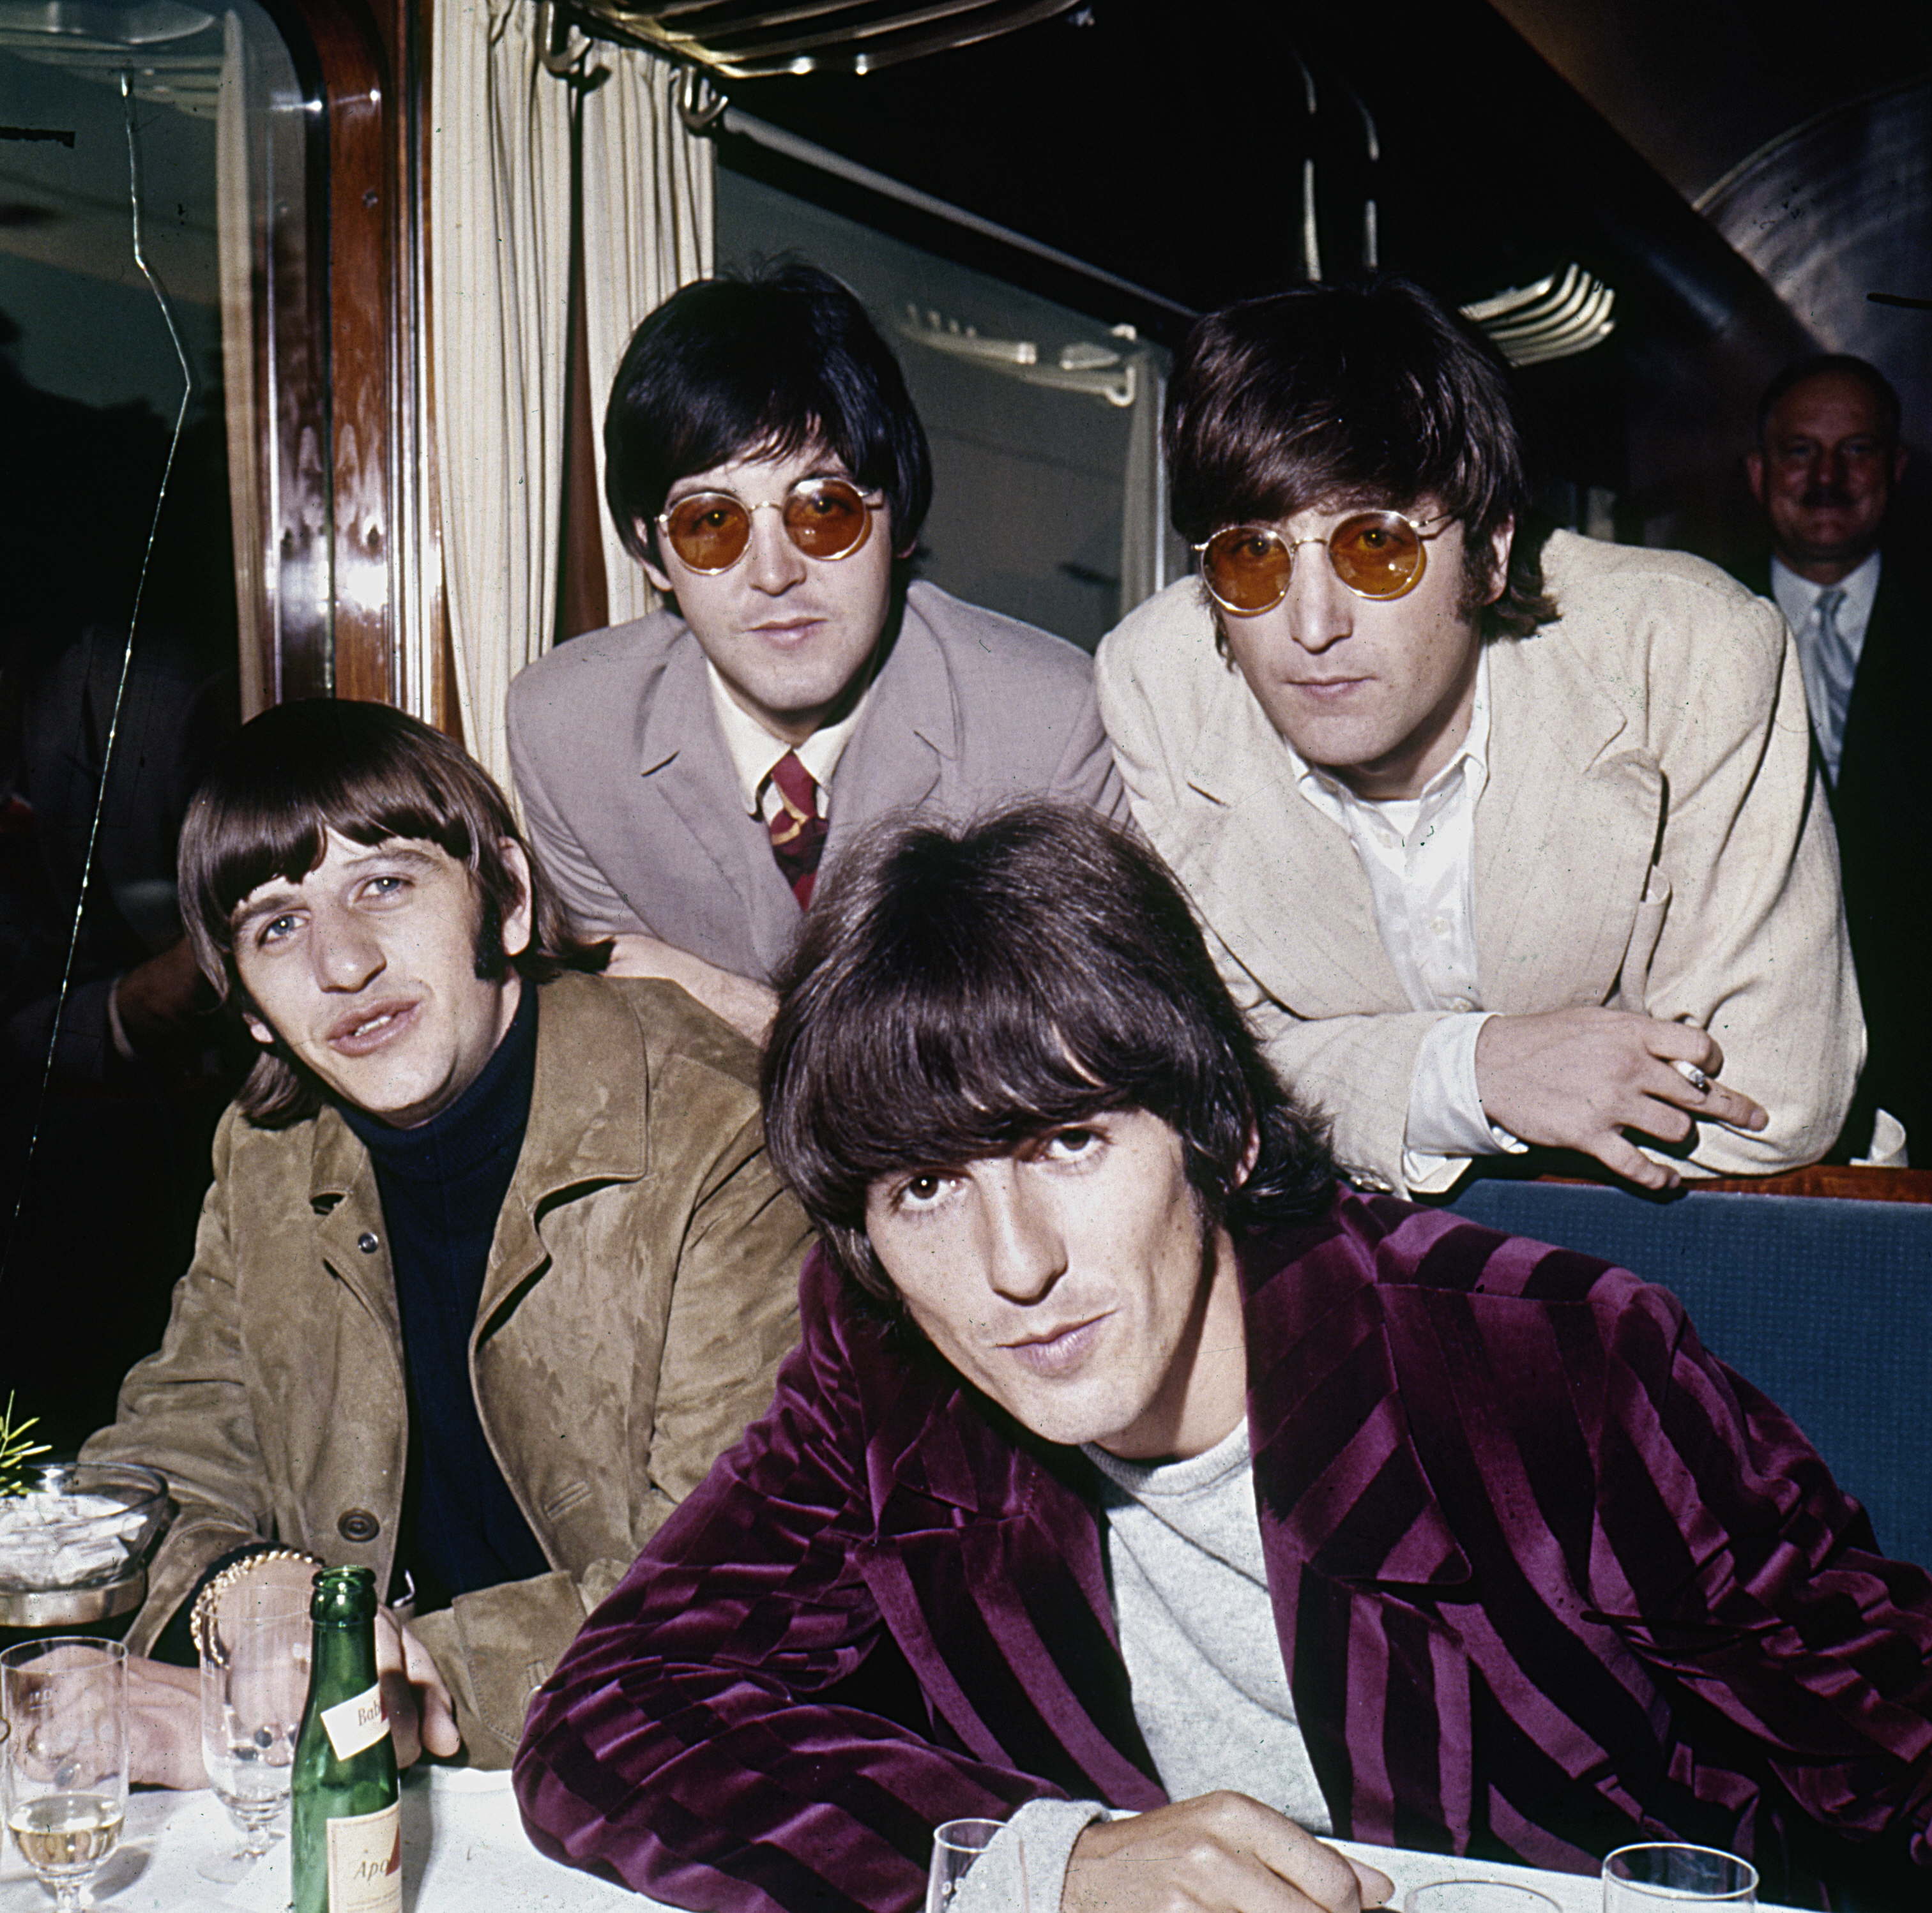 The Beatles' Ringo Starr, Paul McCartney, George Harrison, and John Lennon at a table